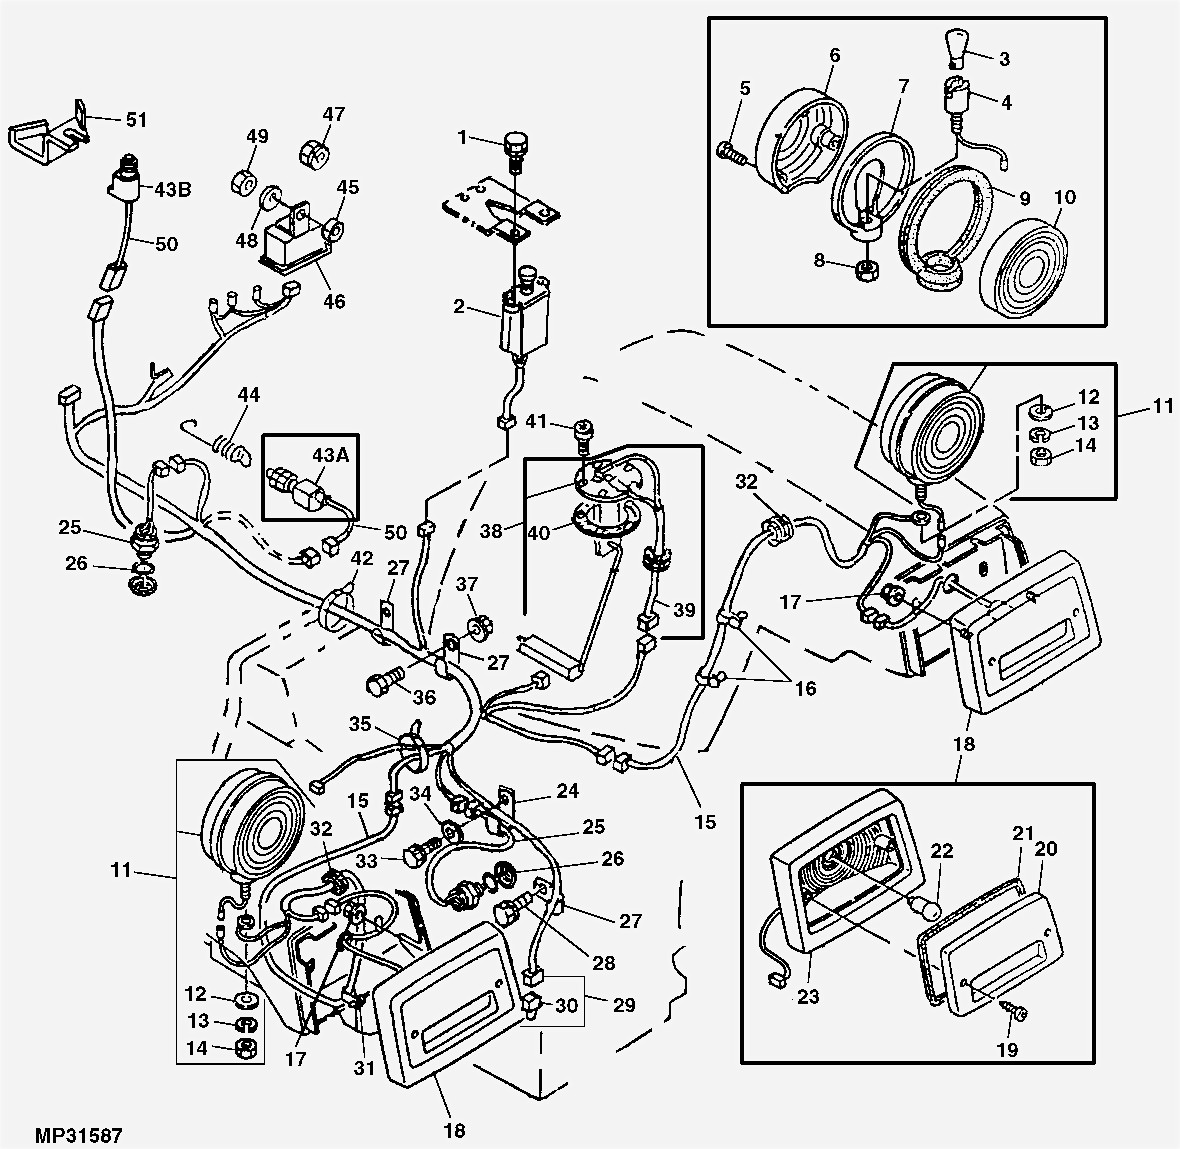 John Deere Wiring Diagram Starter Ignition Switch 318 Schematic Symbols Auto Repair 1224